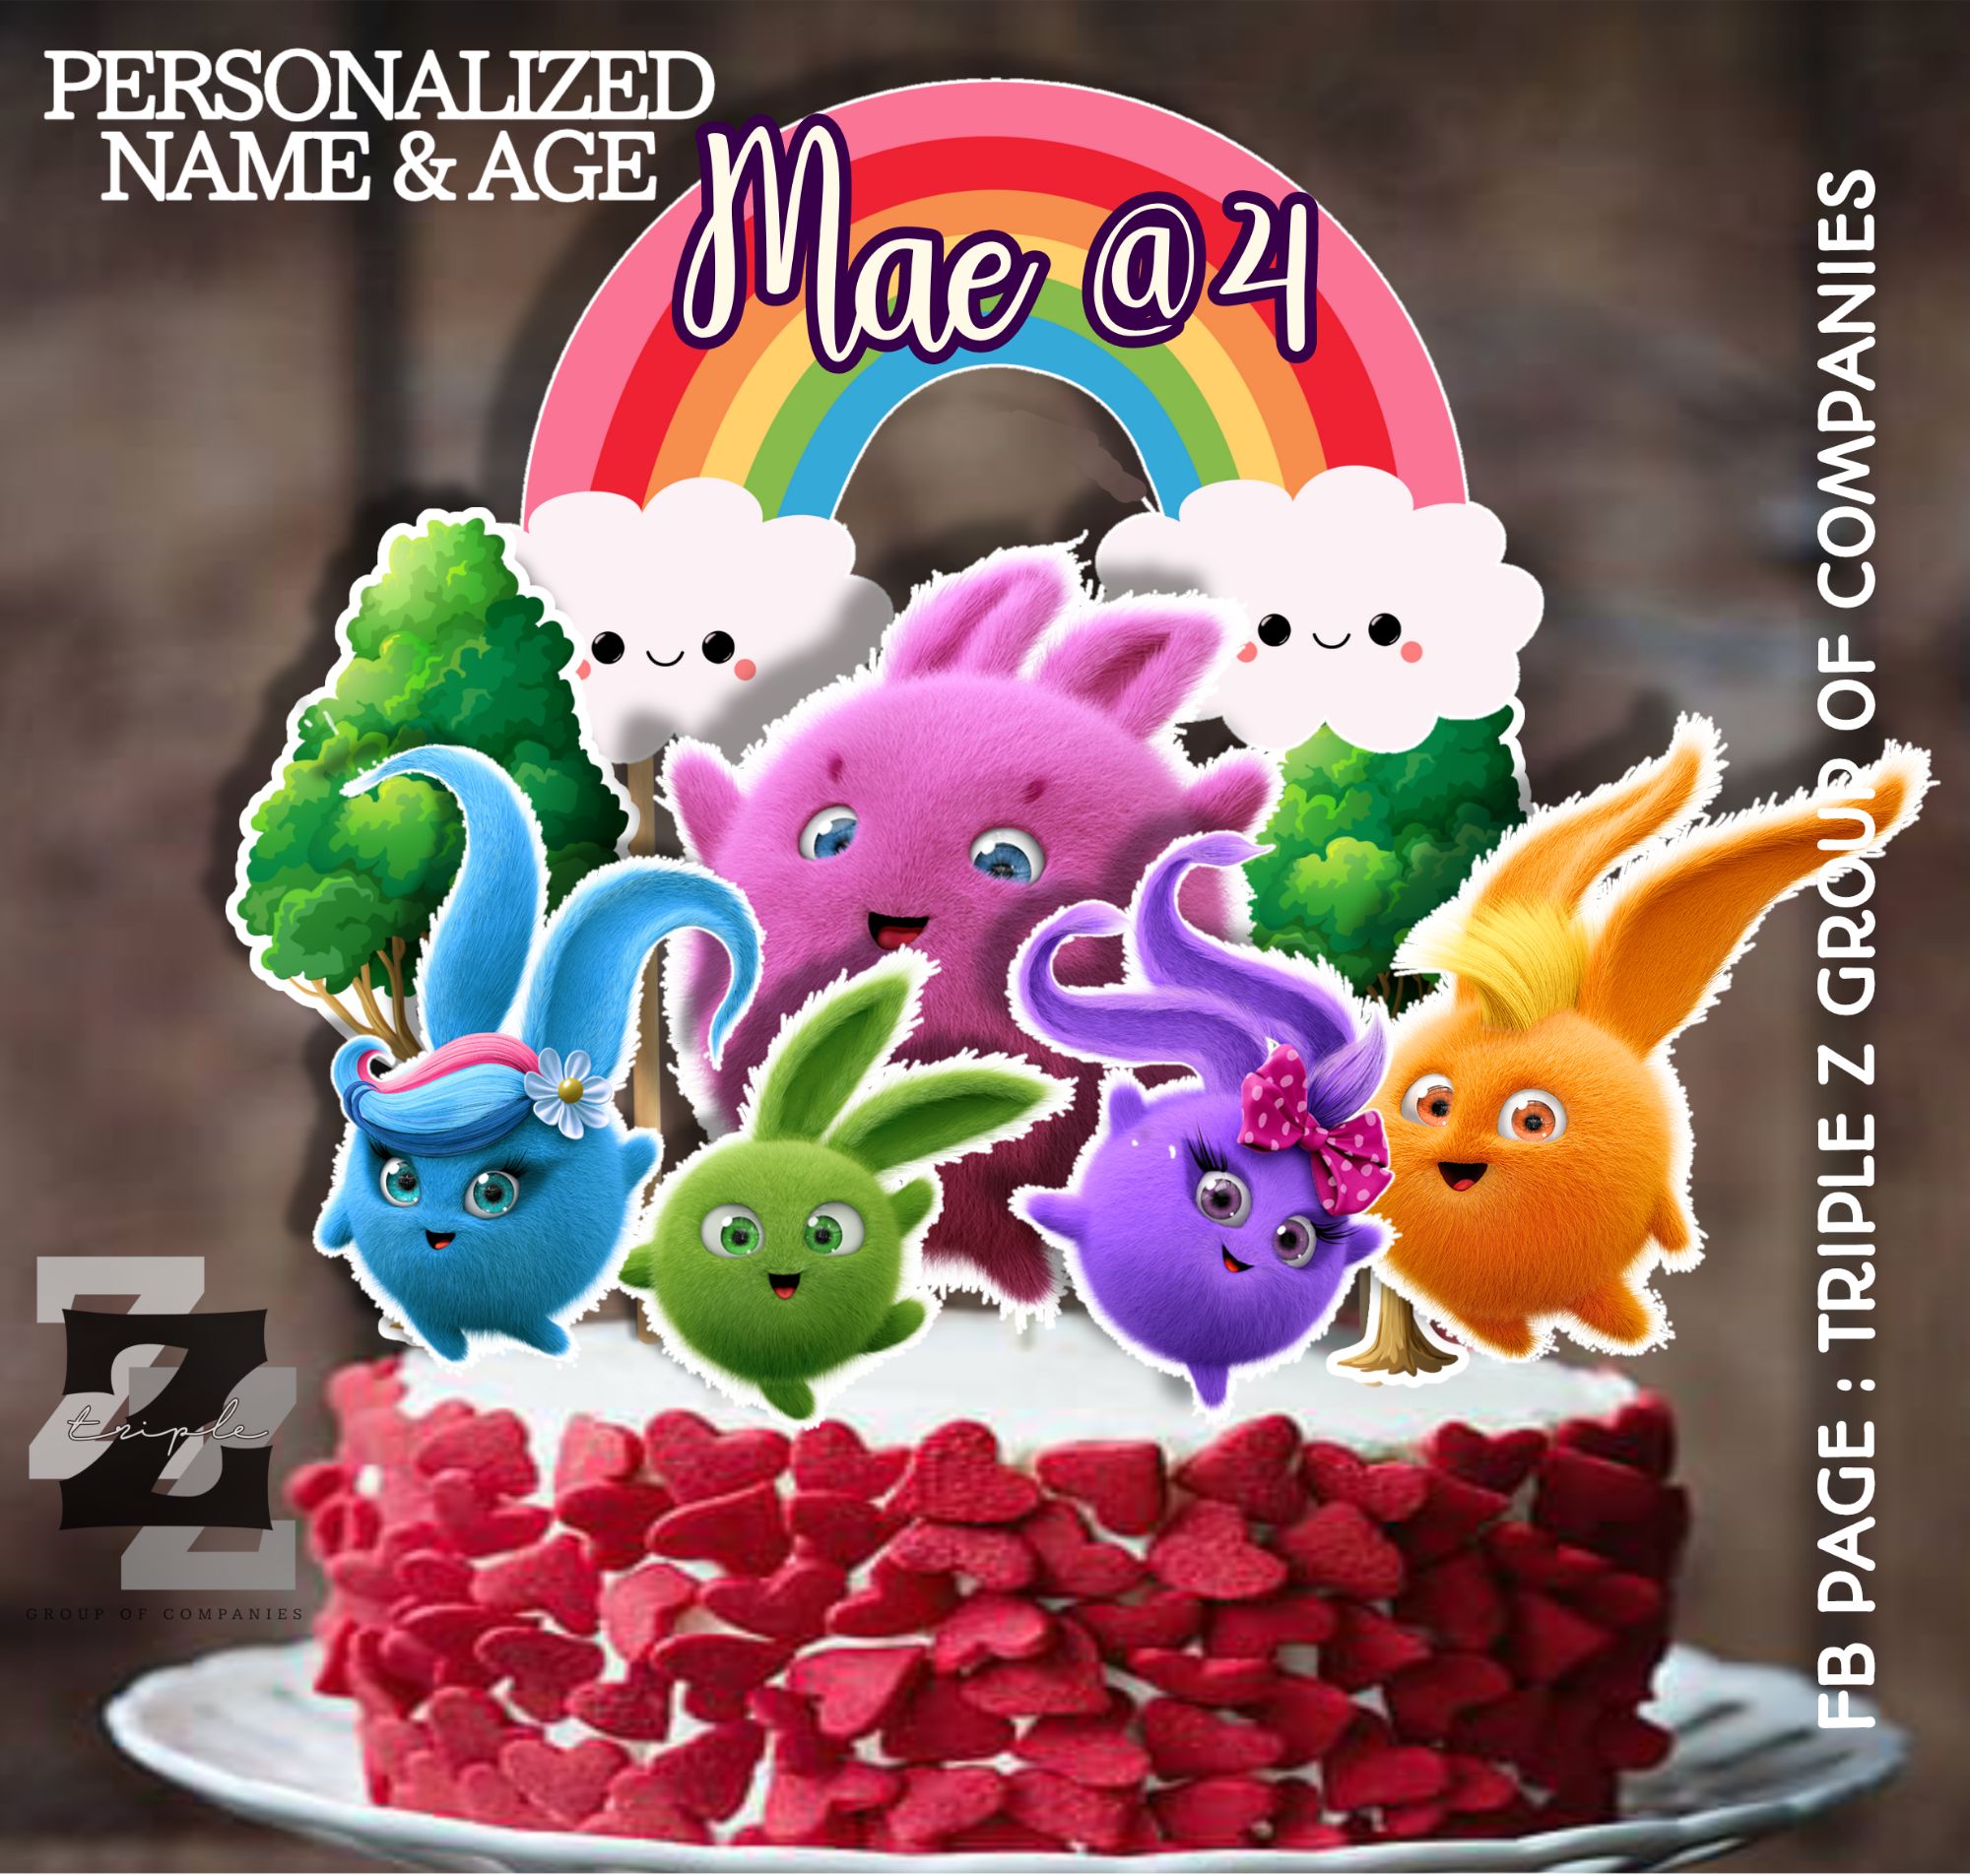 Aggregate 74+ sunny bunnies cake latest 